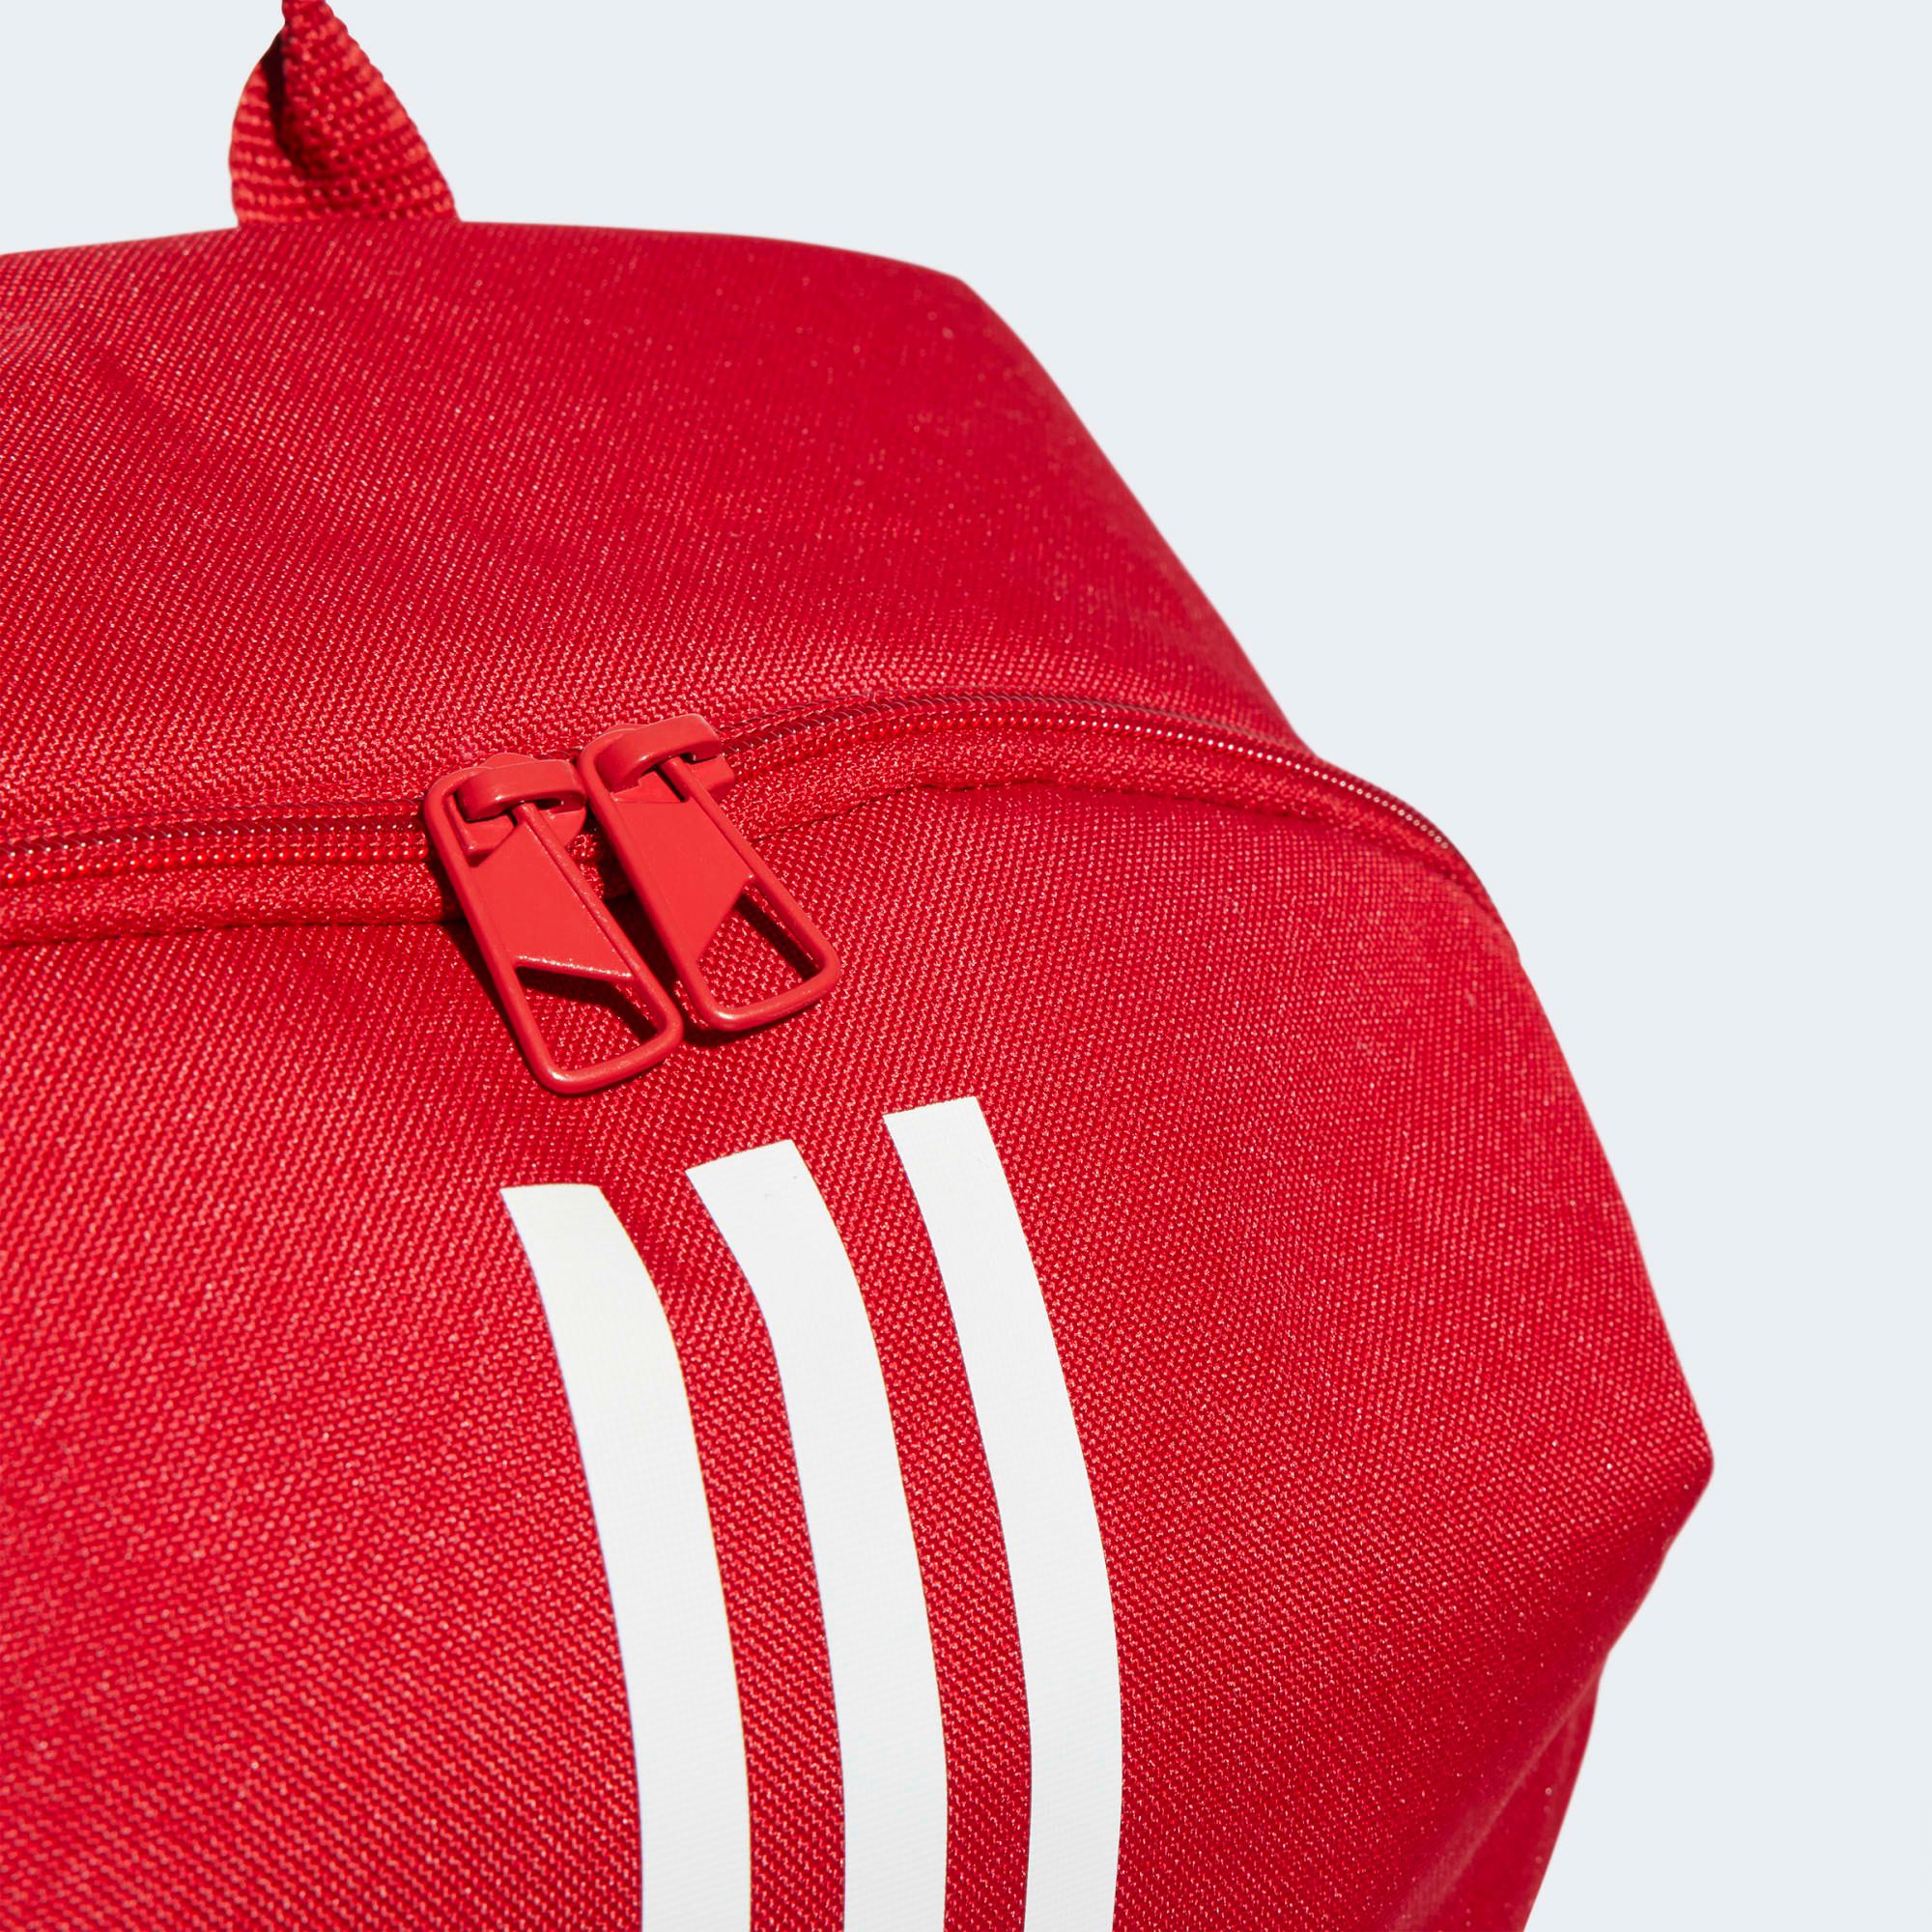  adidas Tiro 23 League Backpack - Red 